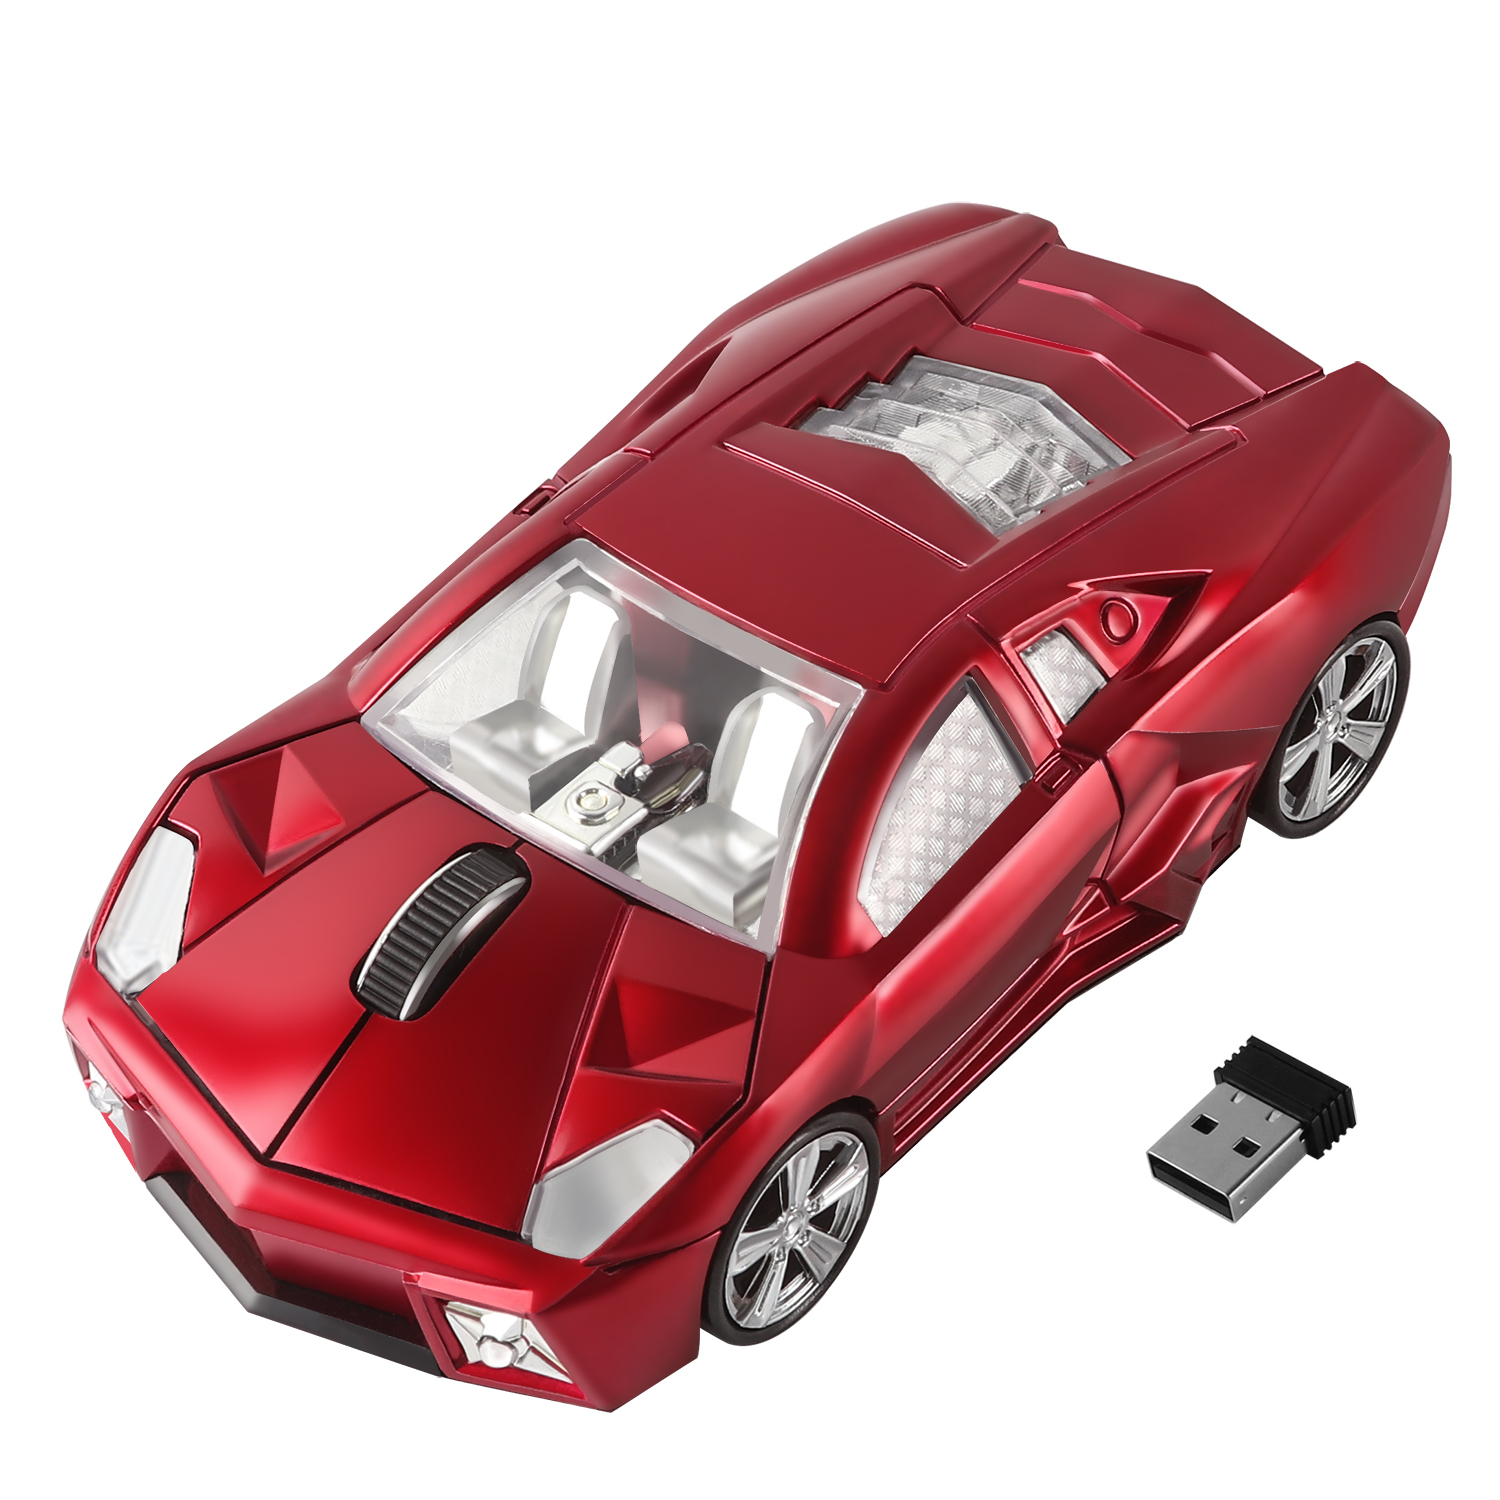 2-4G-Wireless-Mouse-Ergonomic-Sports-Car-Design-Gaming-Mause-1600-DPI-USB-Optical-Kids-Gift (11)